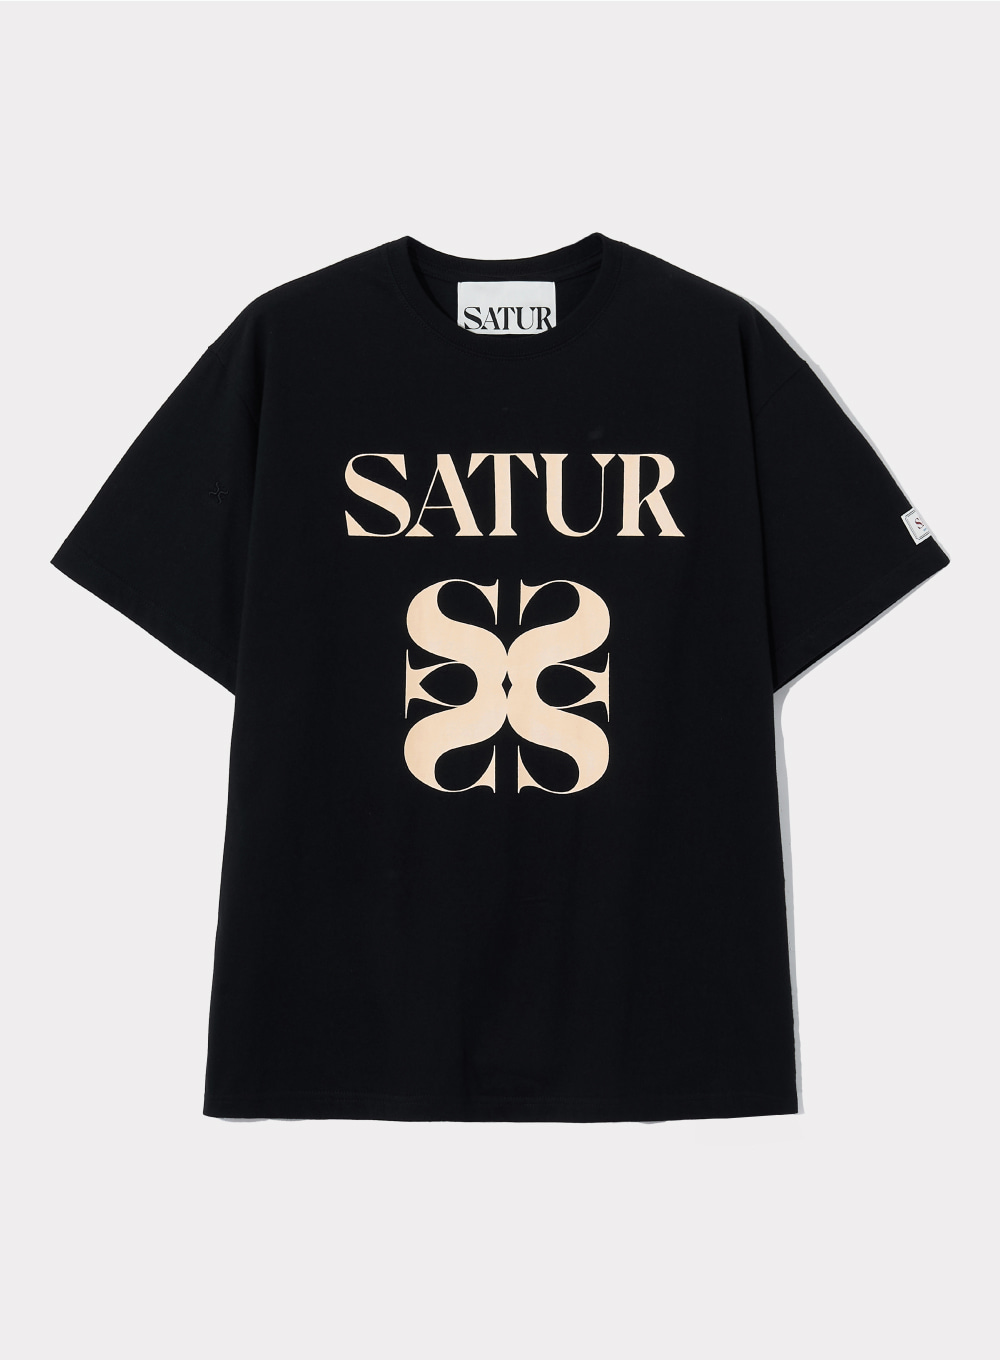 Satur All Day T-Shirts - Classic Black